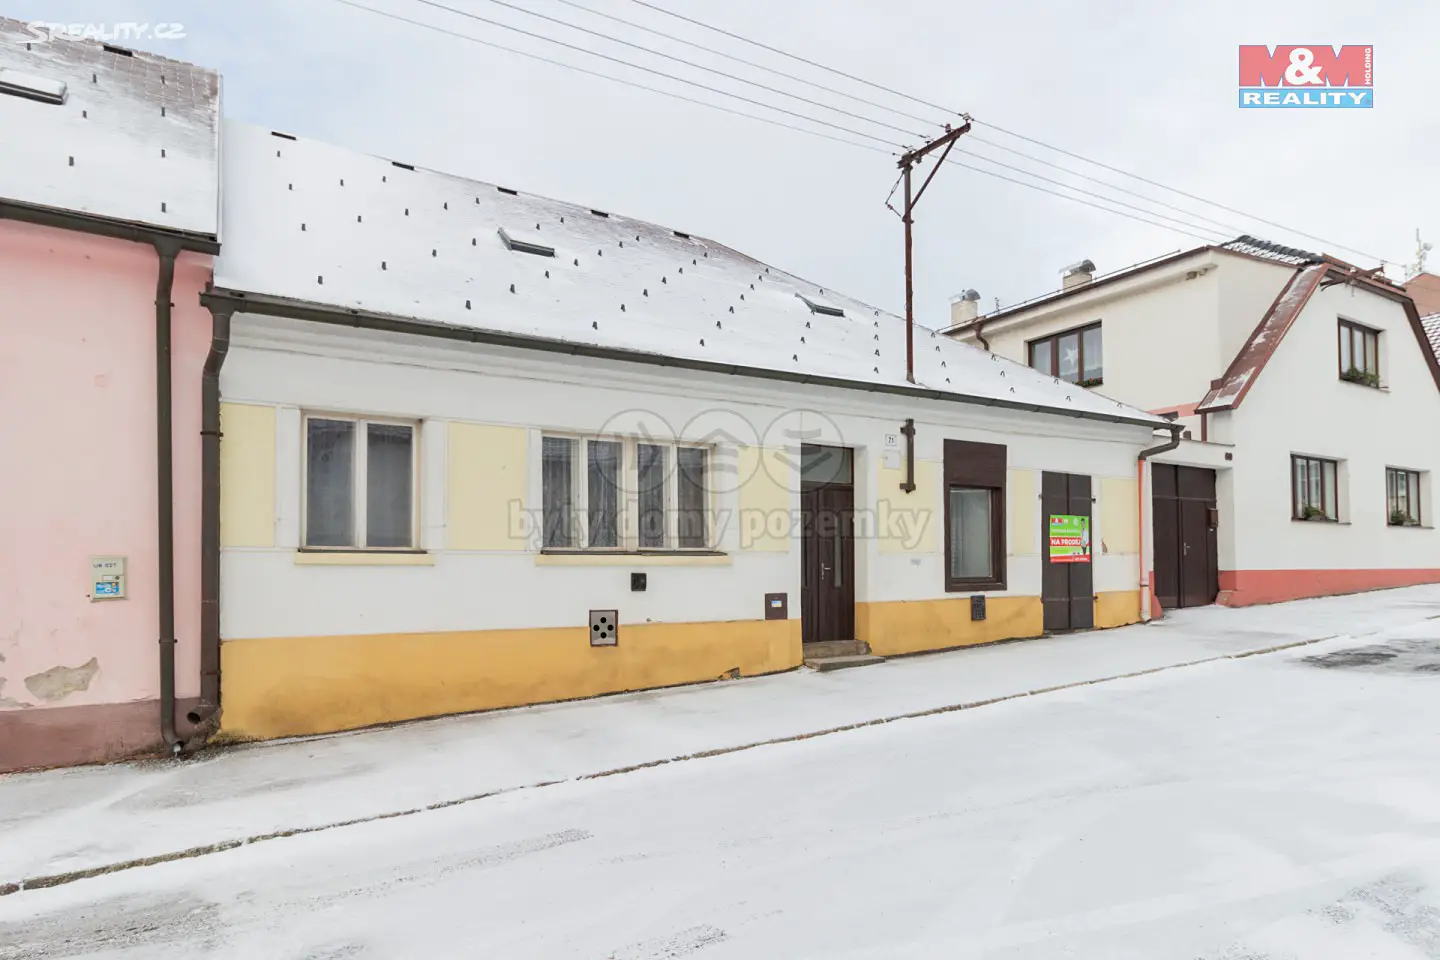 Prodej  rodinného domu 250 m², pozemek 403 m², Habry, okres Havlíčkův Brod